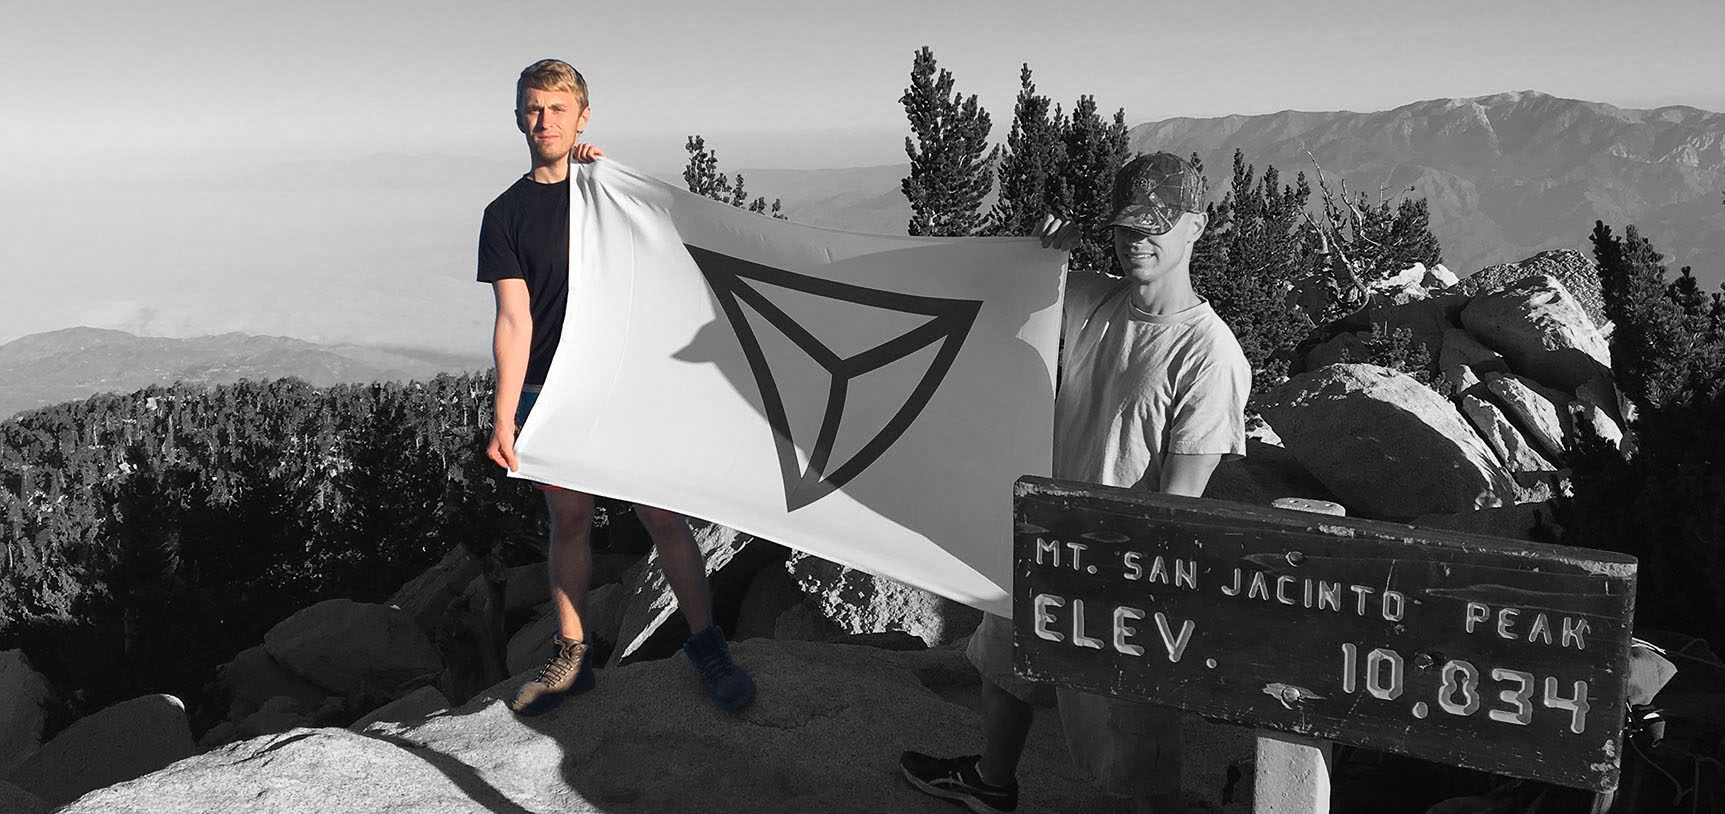 Alex Loupe holds an Identity Europa flag